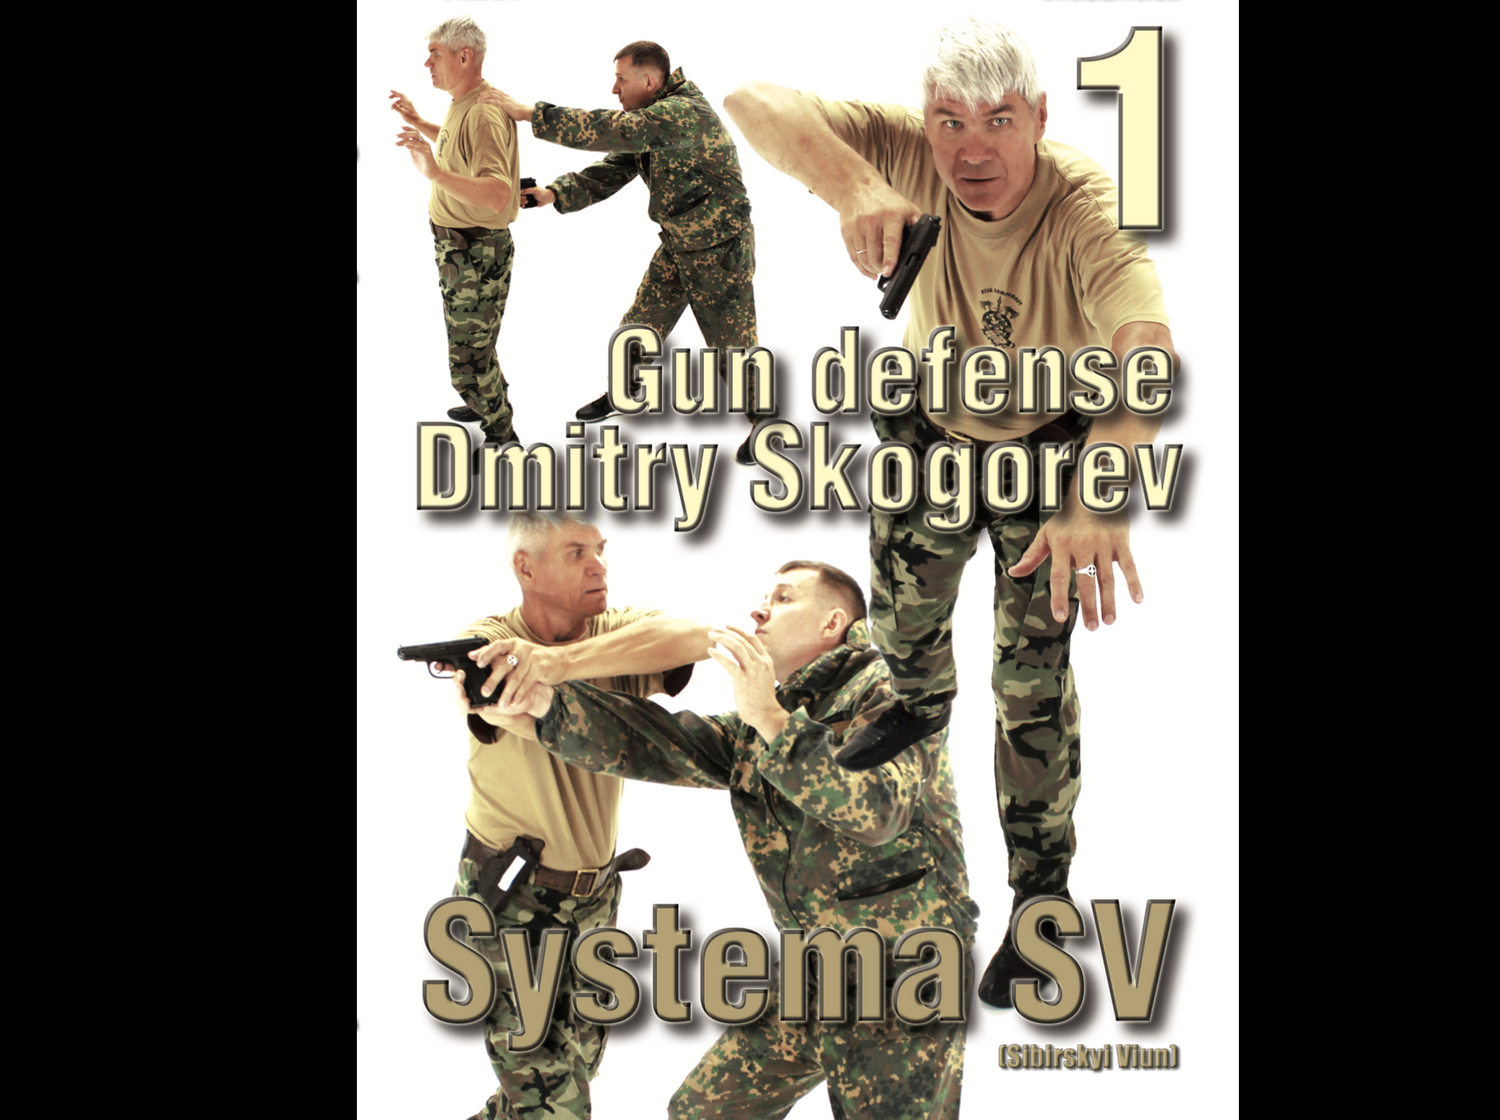 Systema SV Gun Defense Vol 1 con Dmitry Skogorev (bajo demanda)